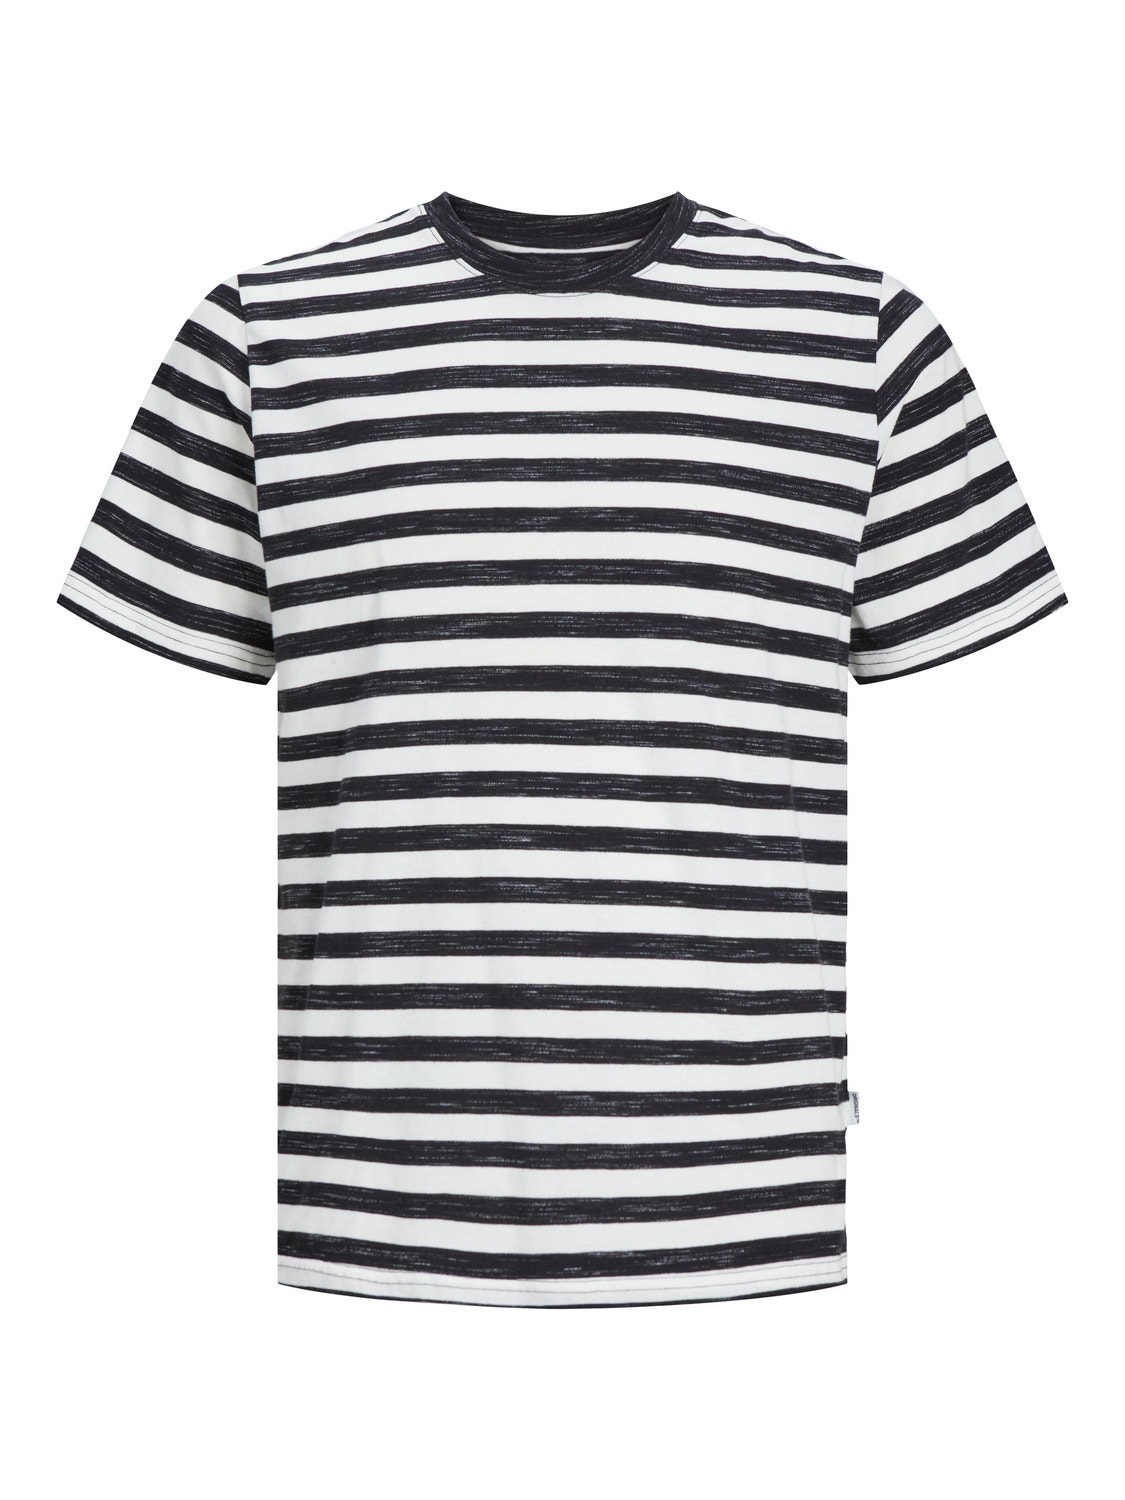 Jack & Jones Striped Crew neck T-shirt -Black - 12252176